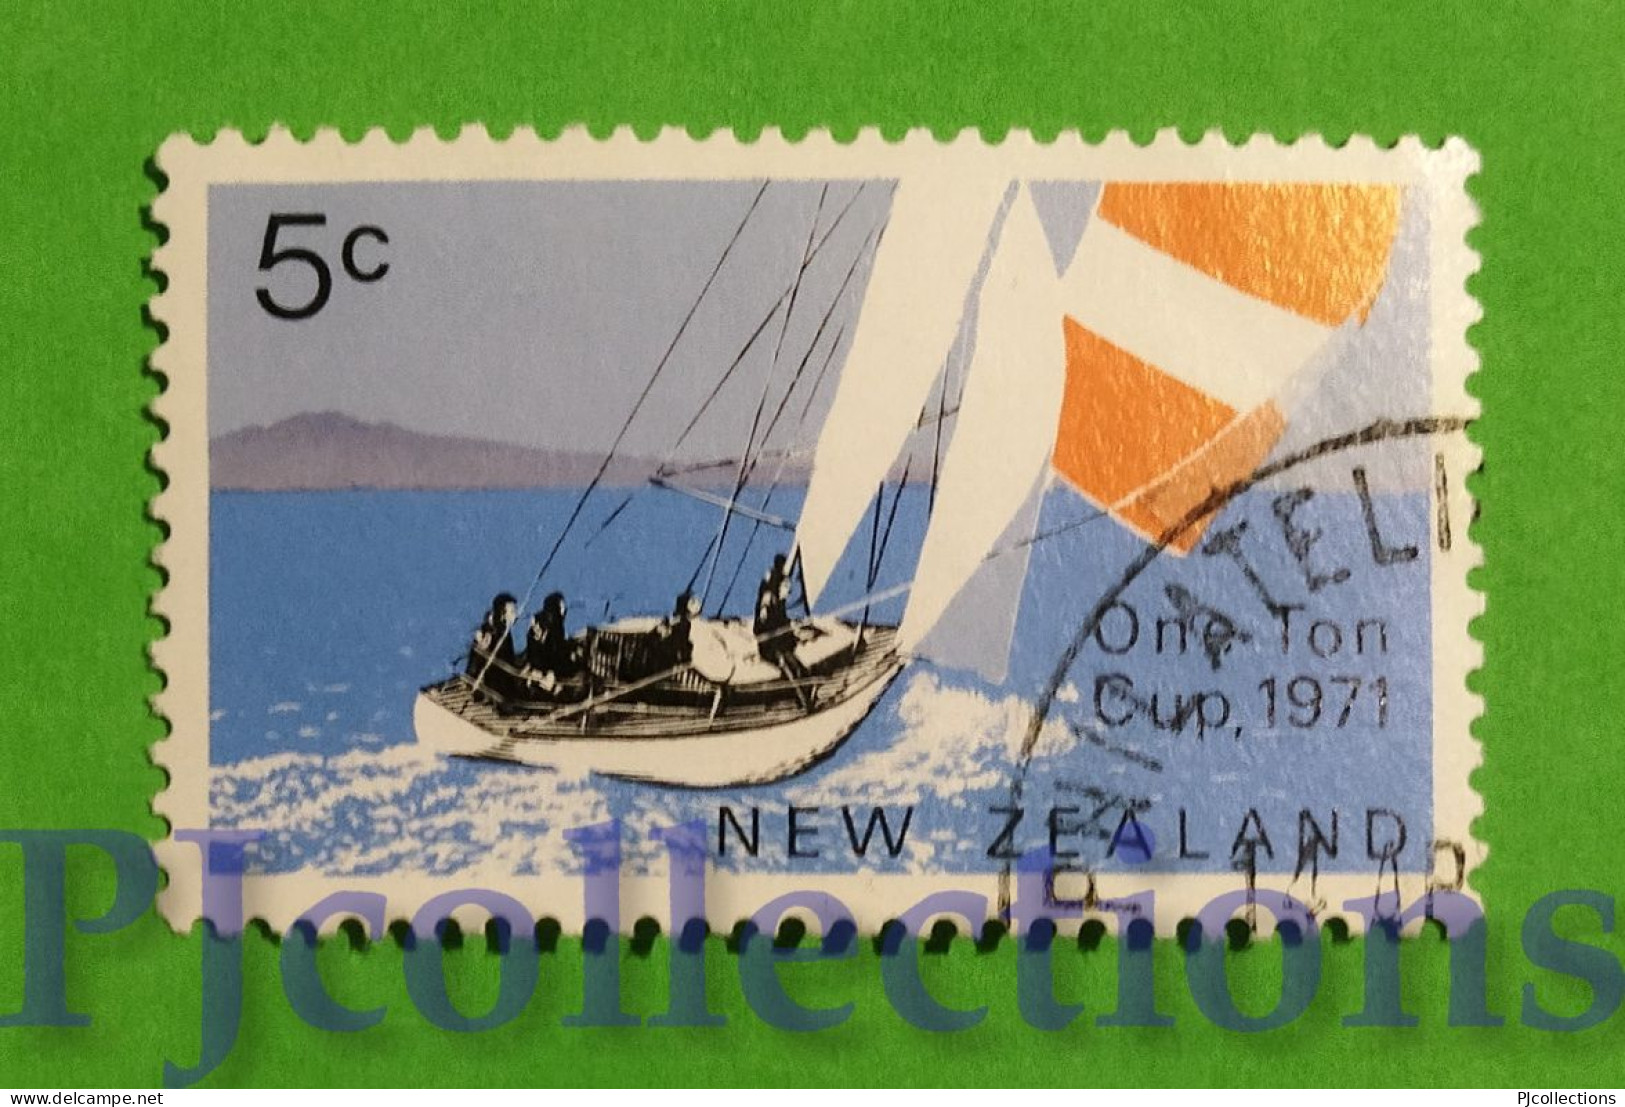 S450 - NUOVA ZELANDA - NEW ZEALAND 1971 ONE TON CUP 5c USATO - USED - Used Stamps